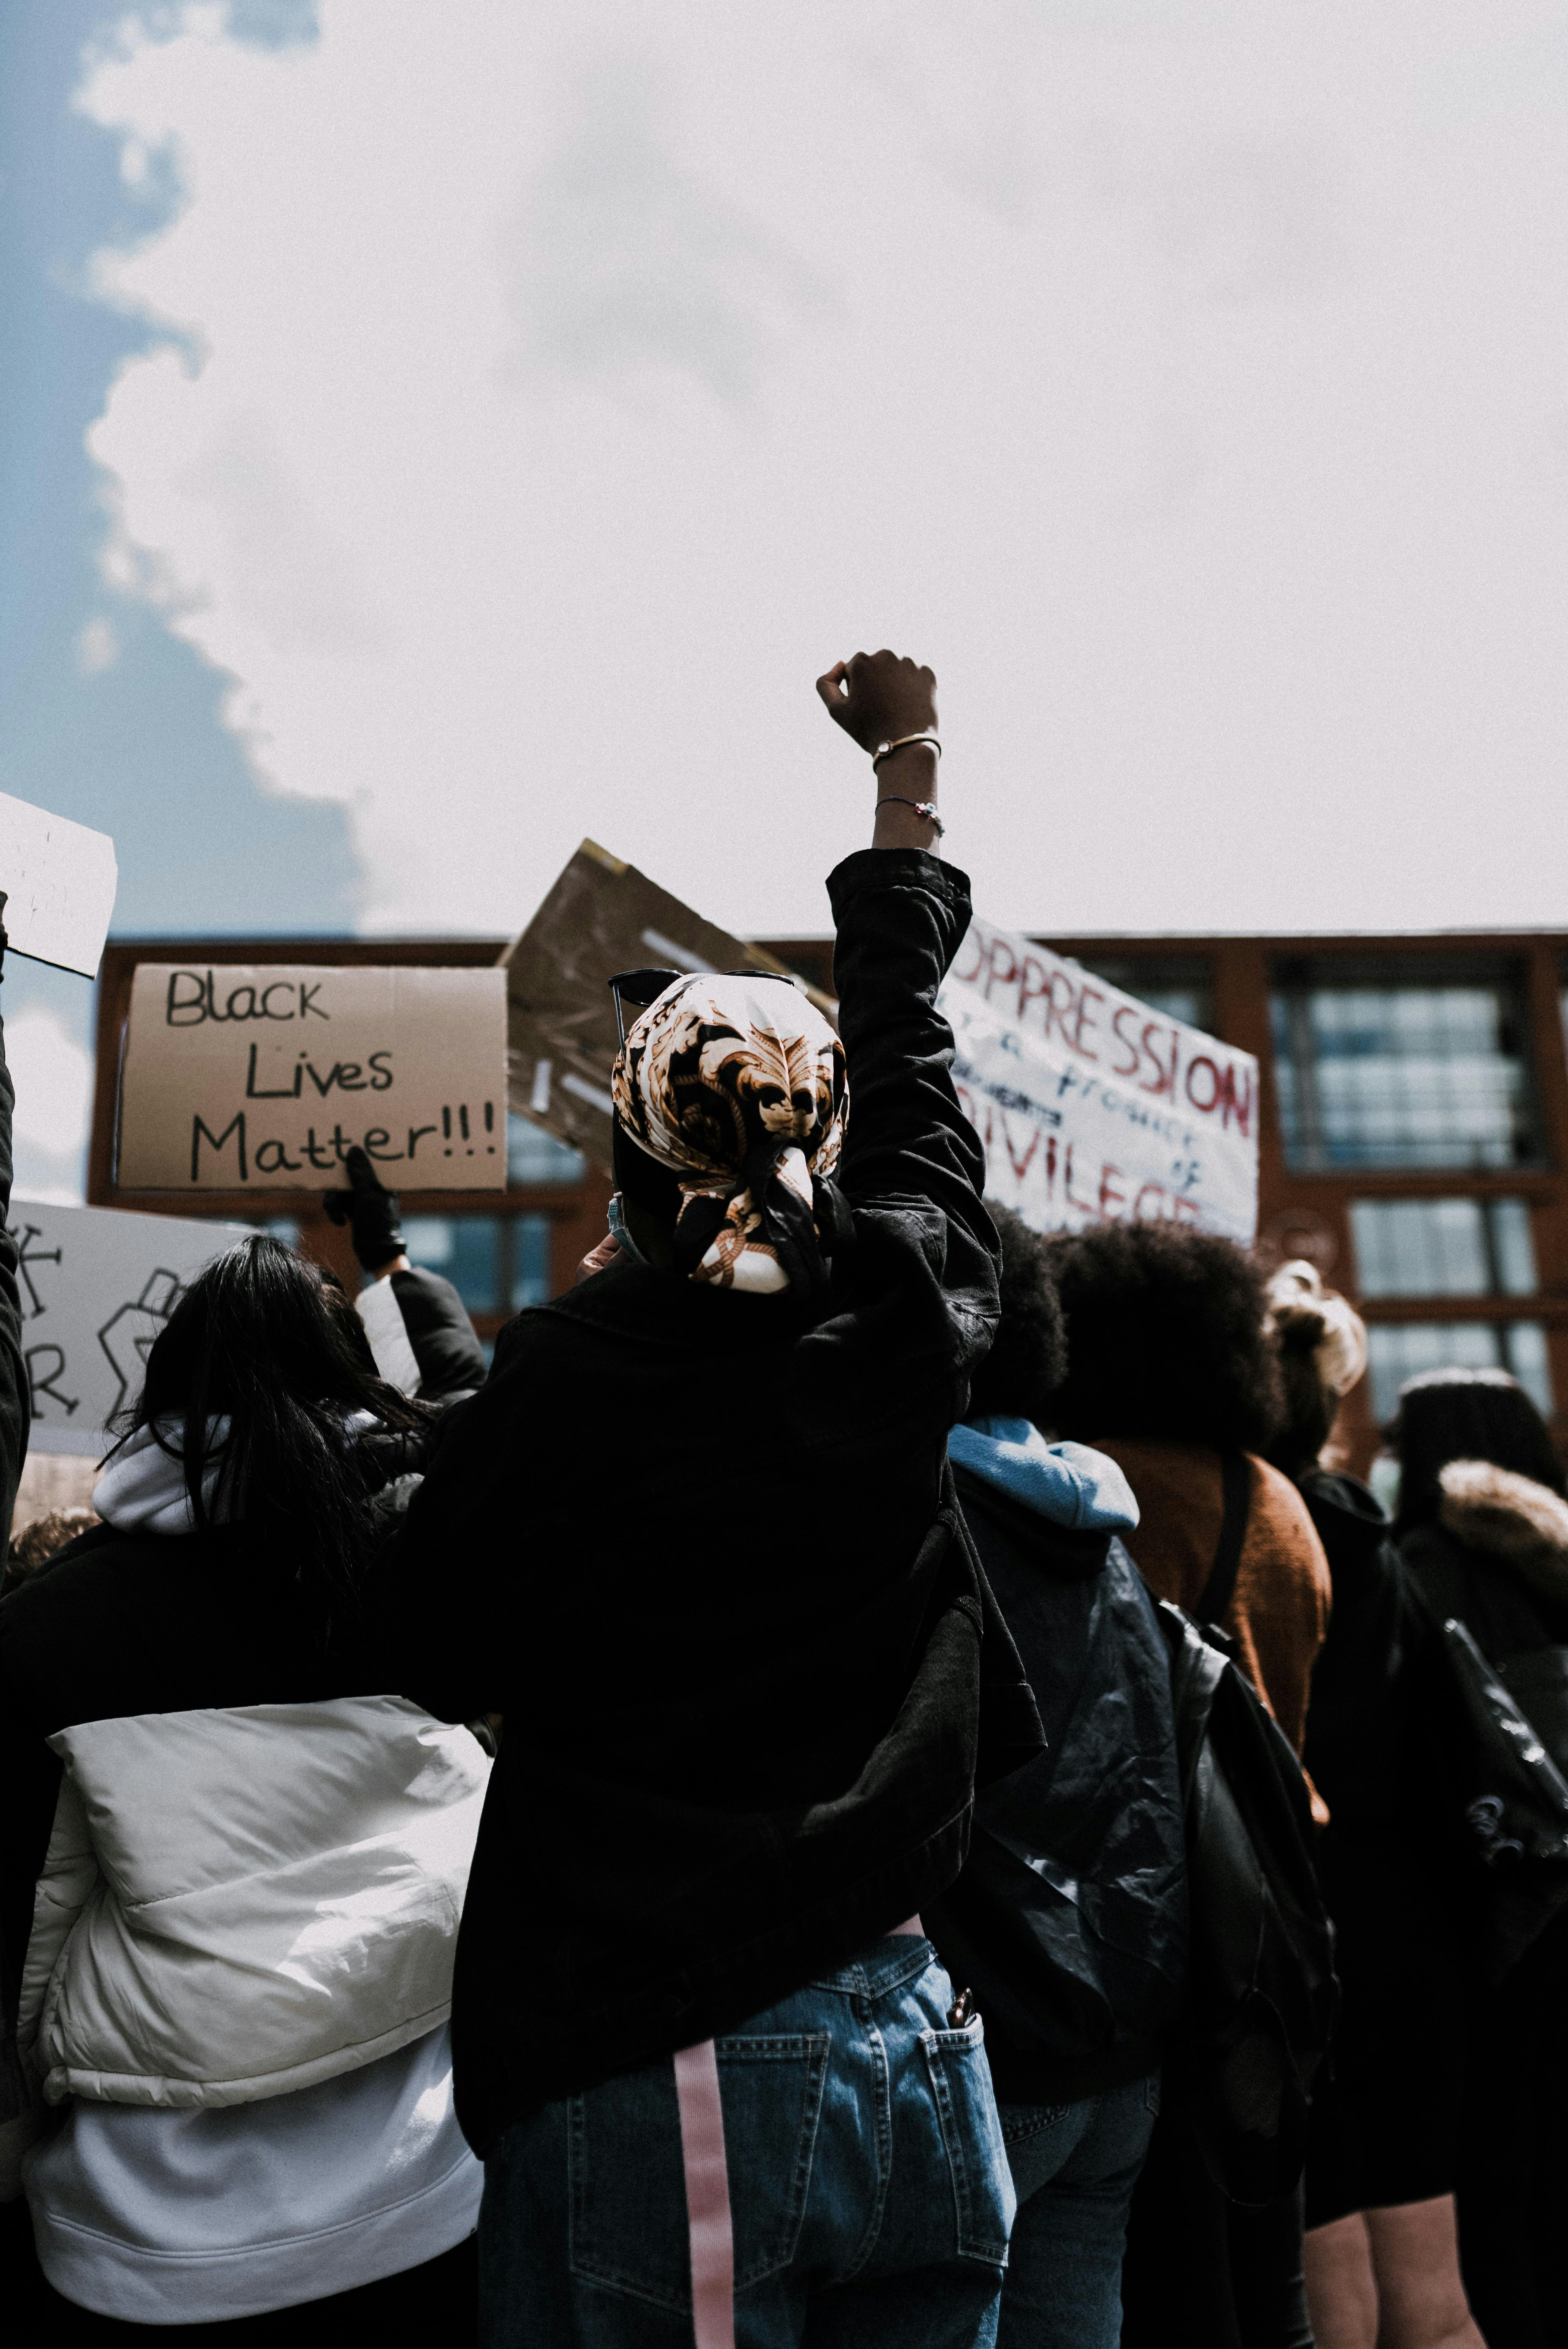 Black Lives Matter protest in Manchester. (06.06.2020)